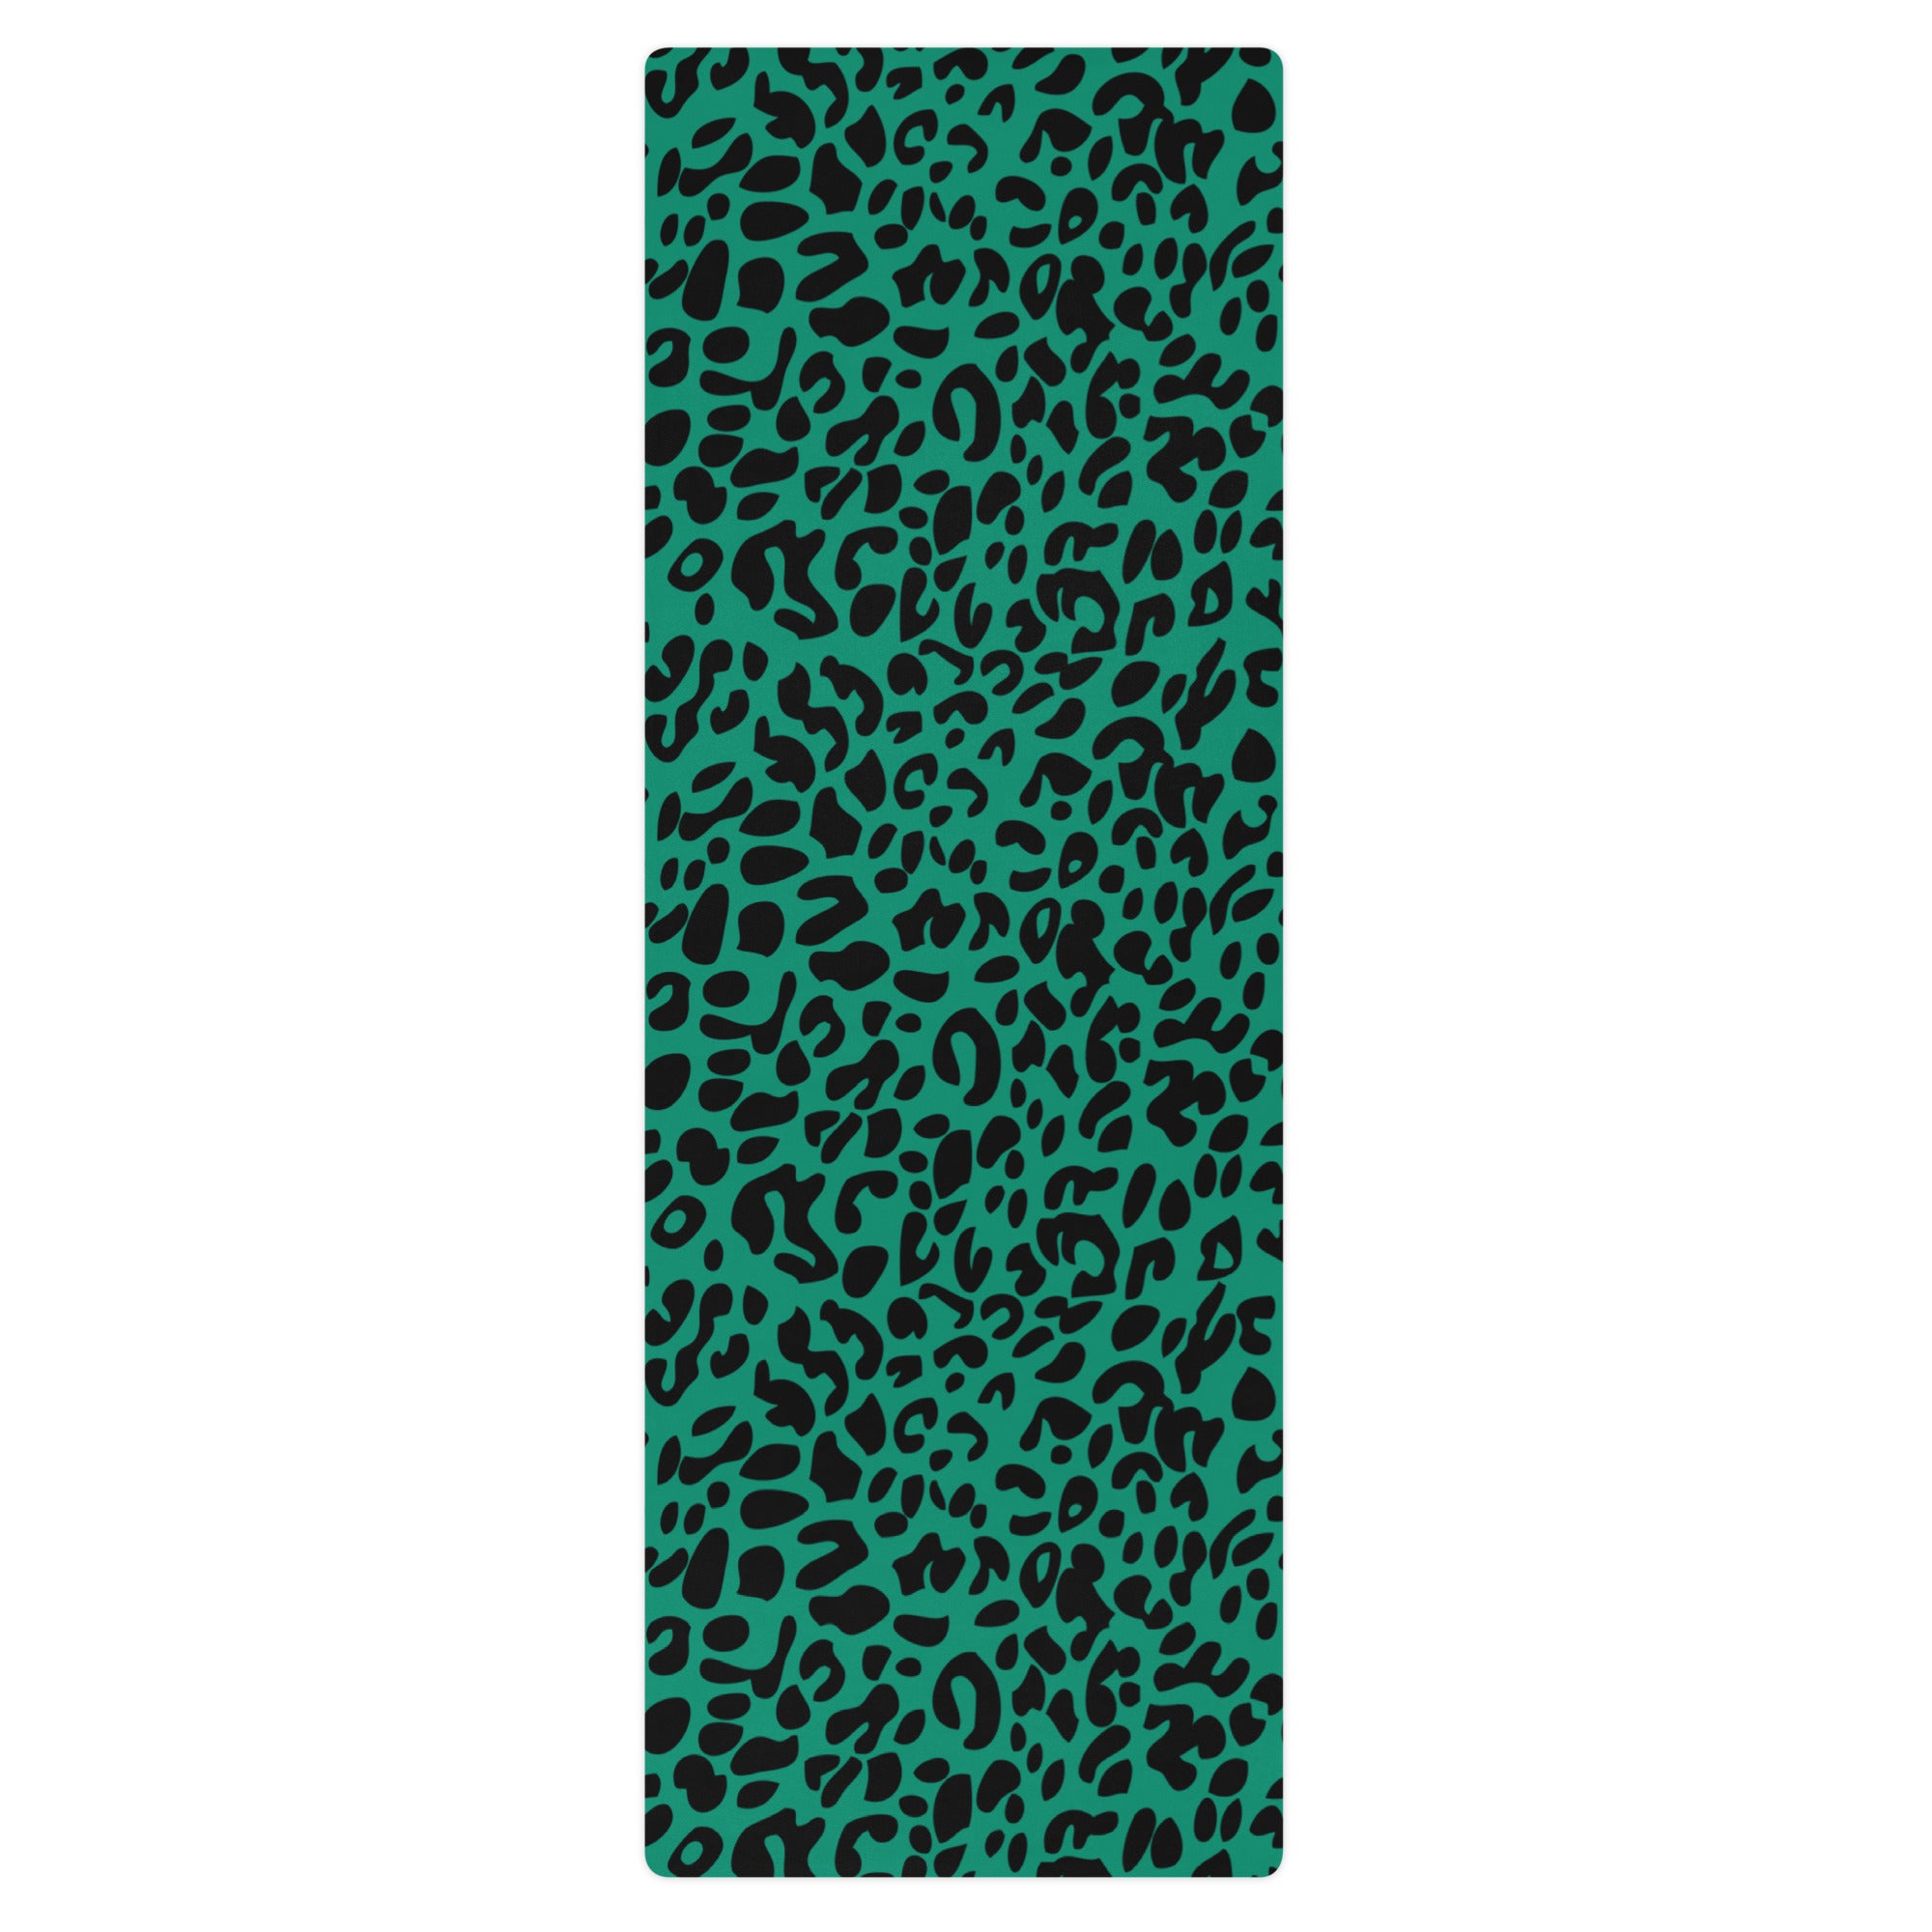 Emerald Green Leopard Yoga Mat